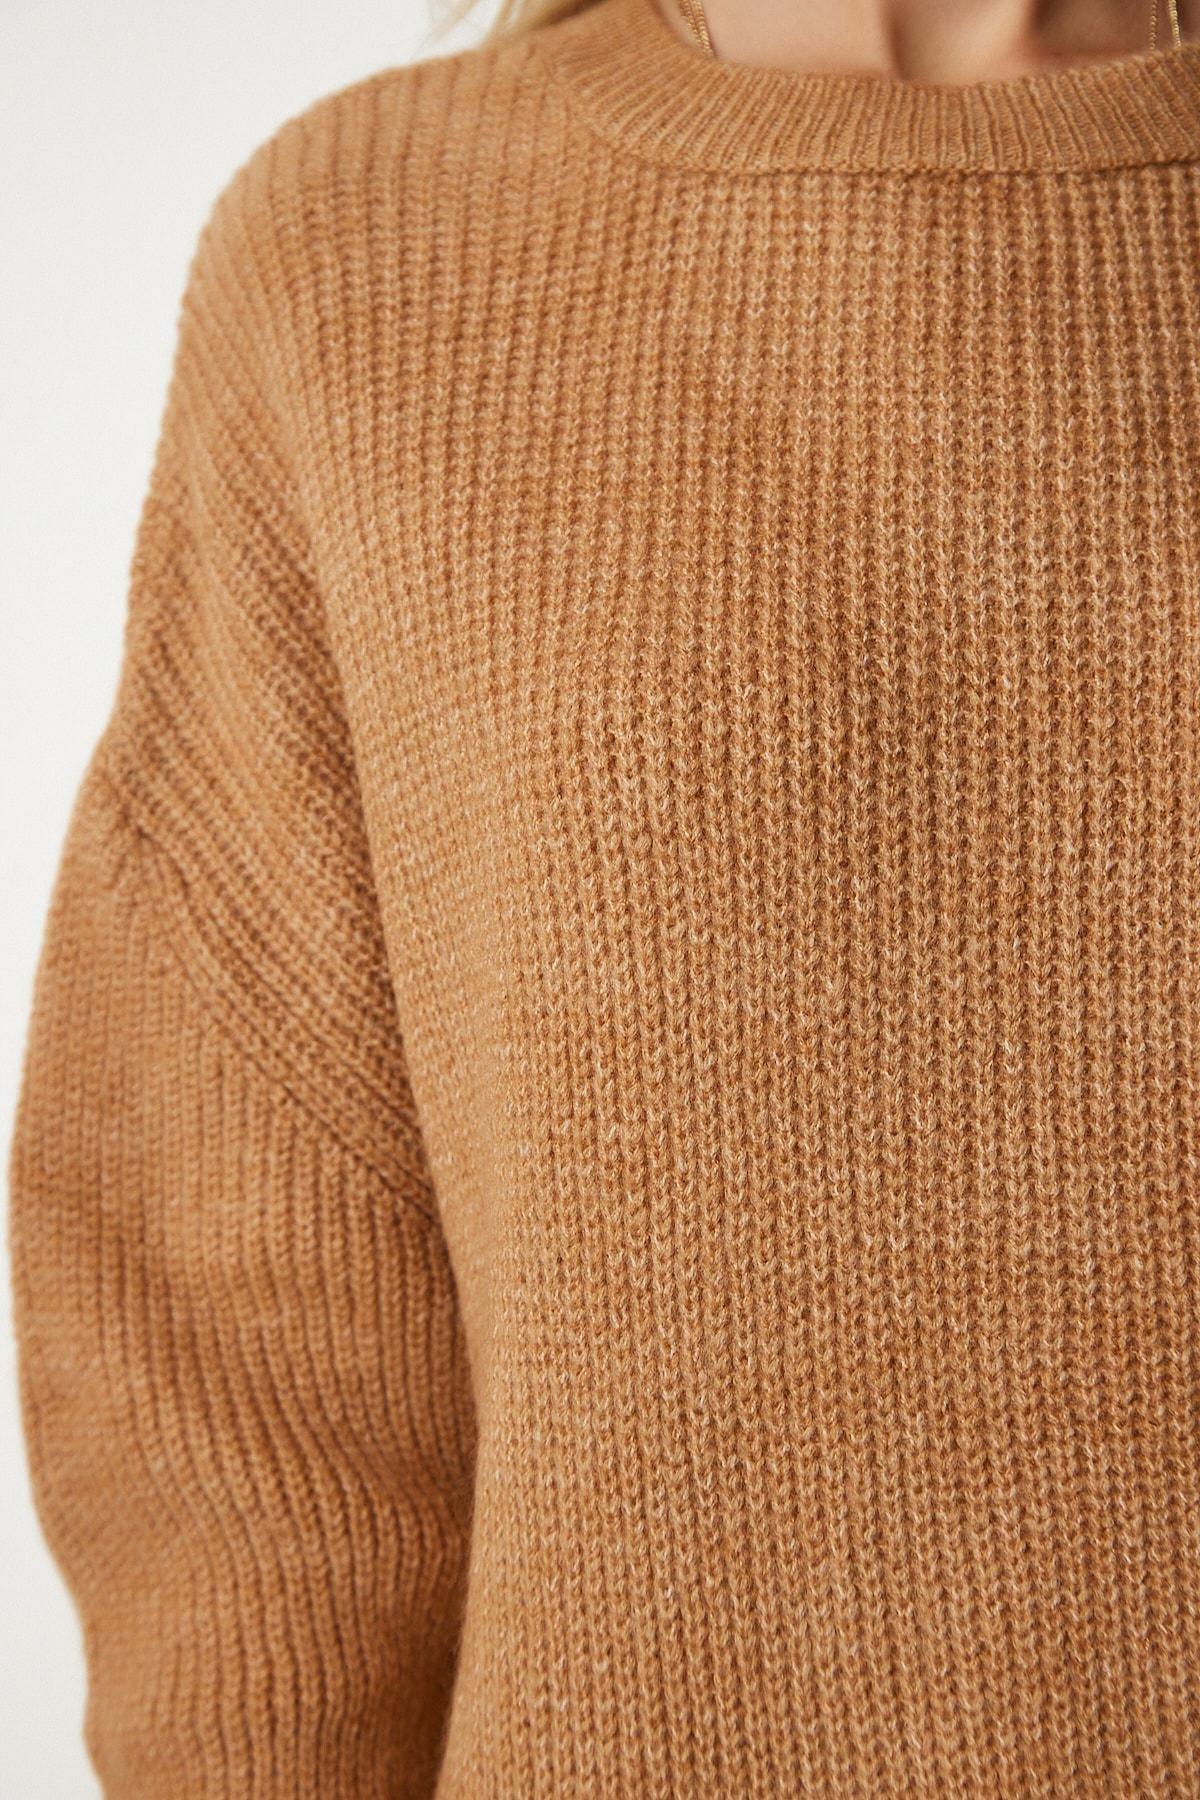 Happiness Istanbul - Beige Oversize Long Basic Knitwear Sweater